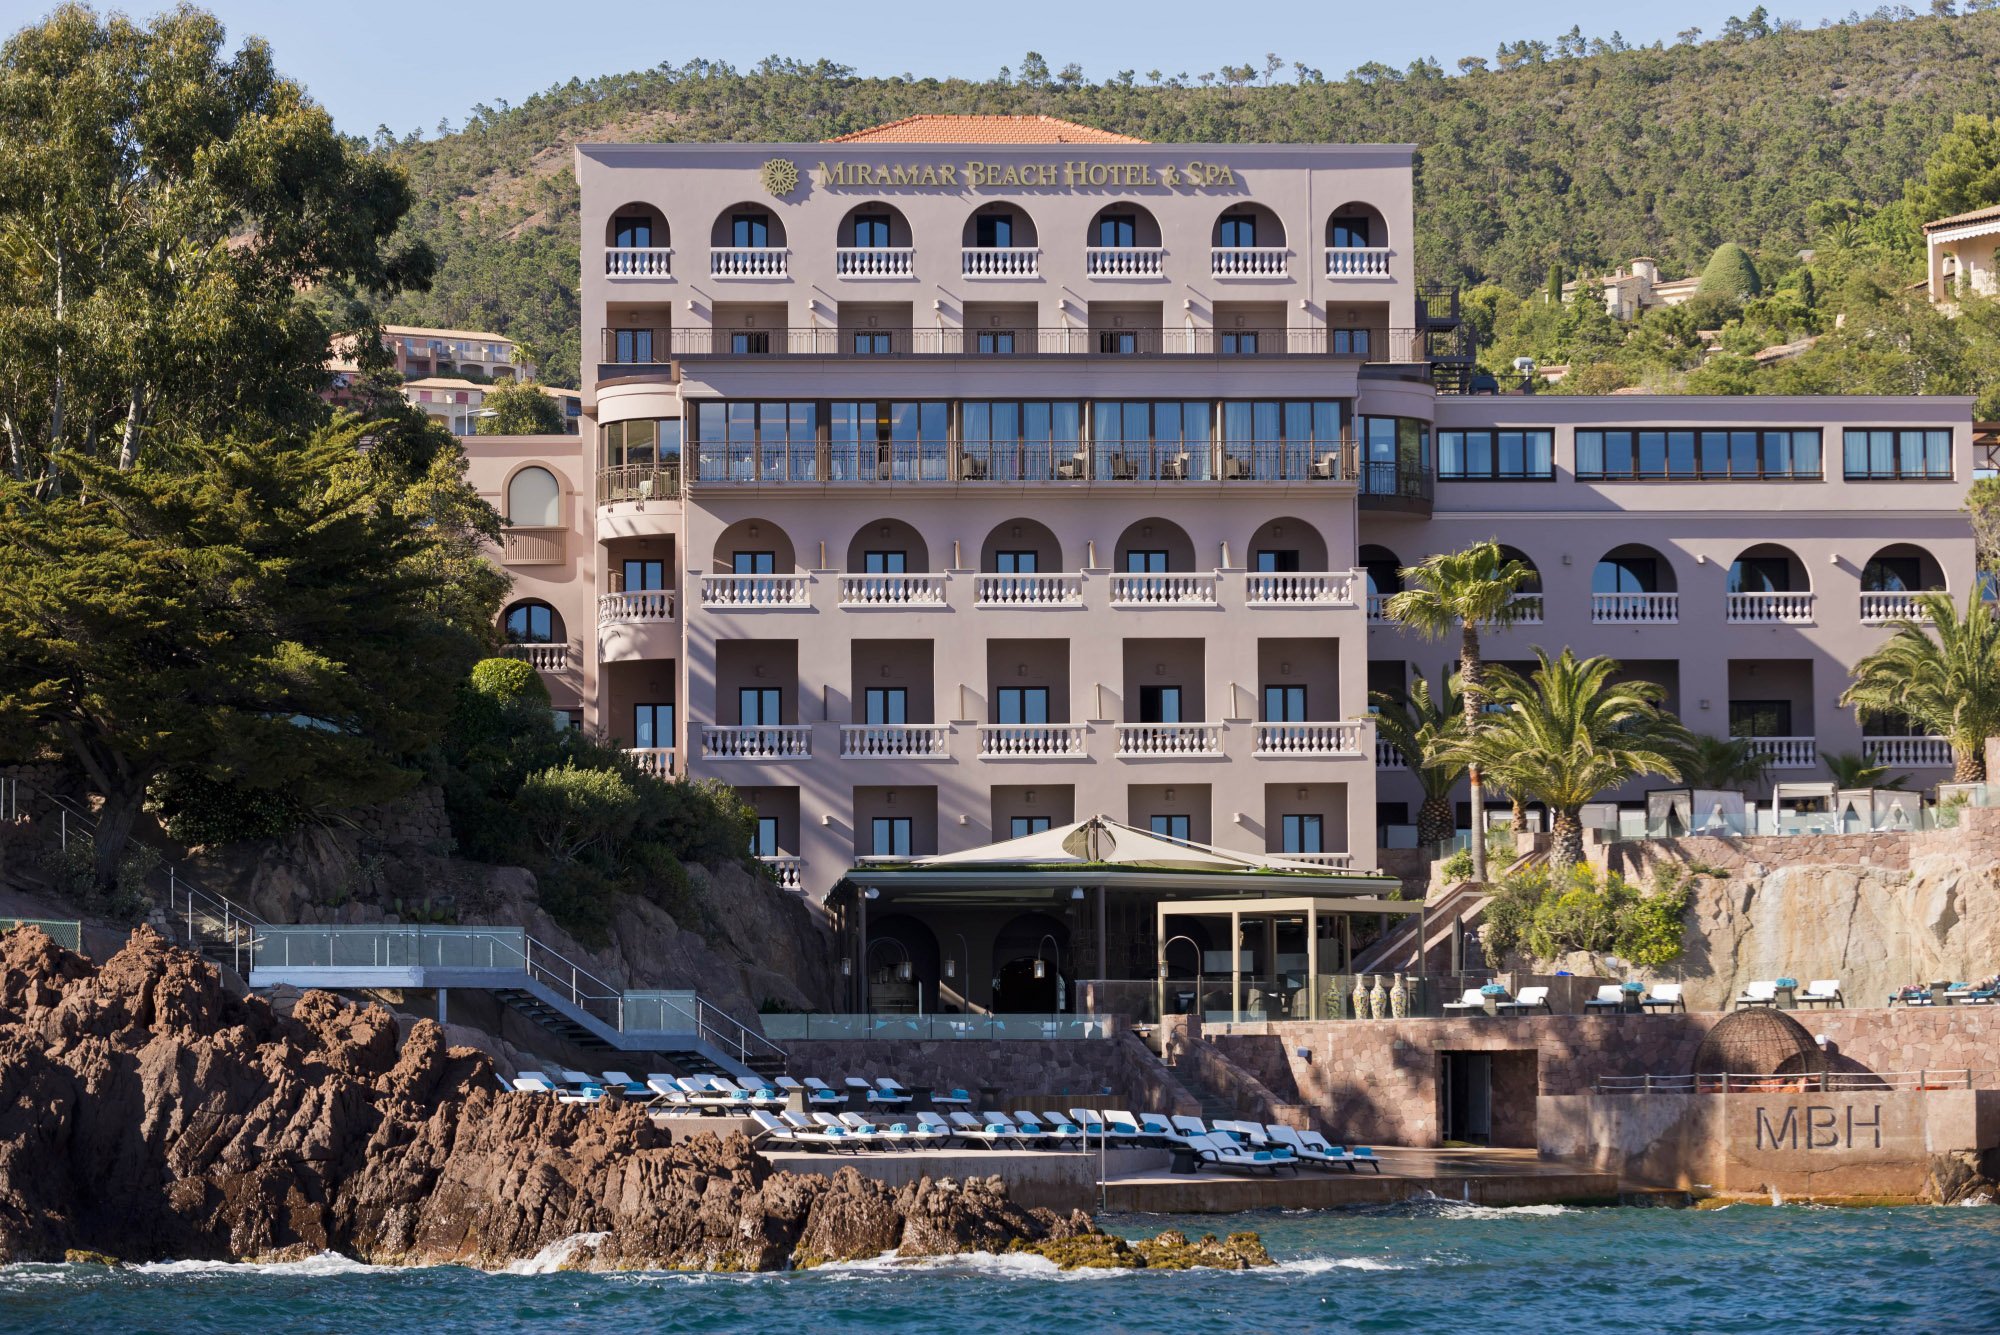 Miramar Beach Hotel & Spa | Cannes Festival